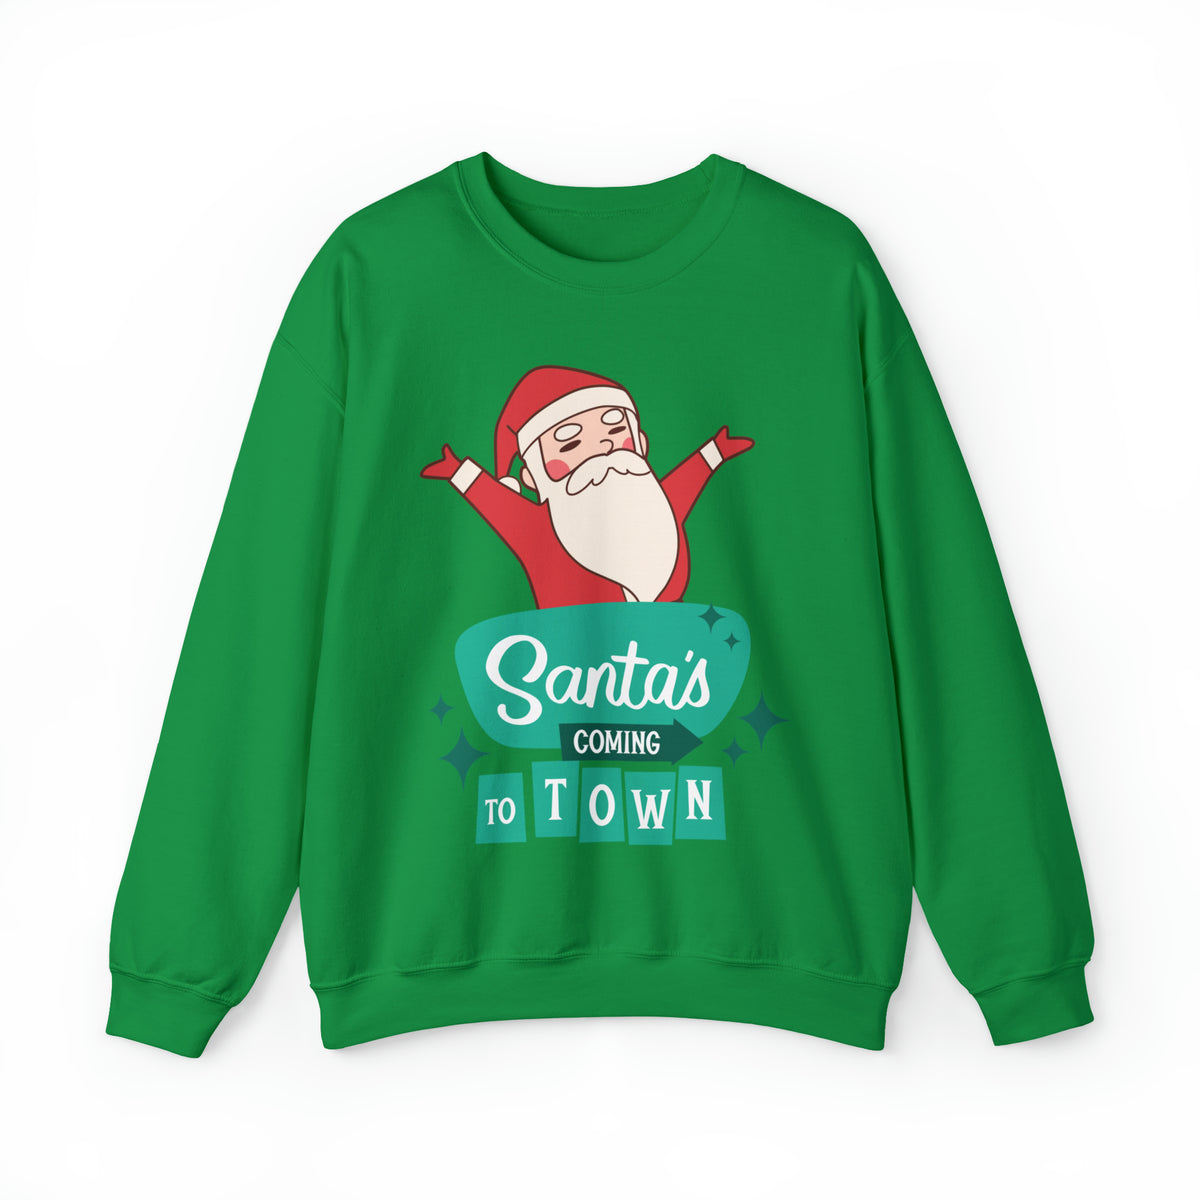 Santas Coming To Town Sweater, Christmas Sweatshirt, Christmas Sweater, Christmas Party Outfit, Holiday Gifts, Funny Christmas Sweater, Ugly Christmas Sweater, Holiday Sweatshirt, Cozy Sweater